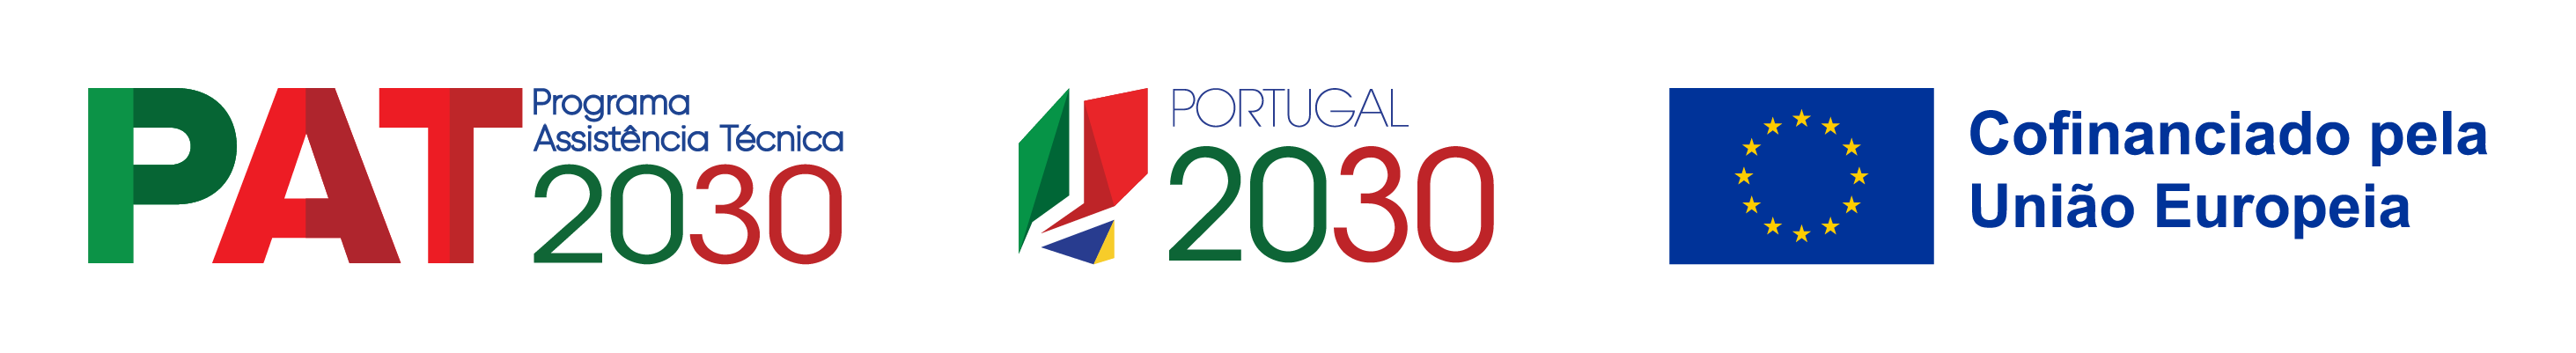 Logótipo POAT Portugal 2020 e UE